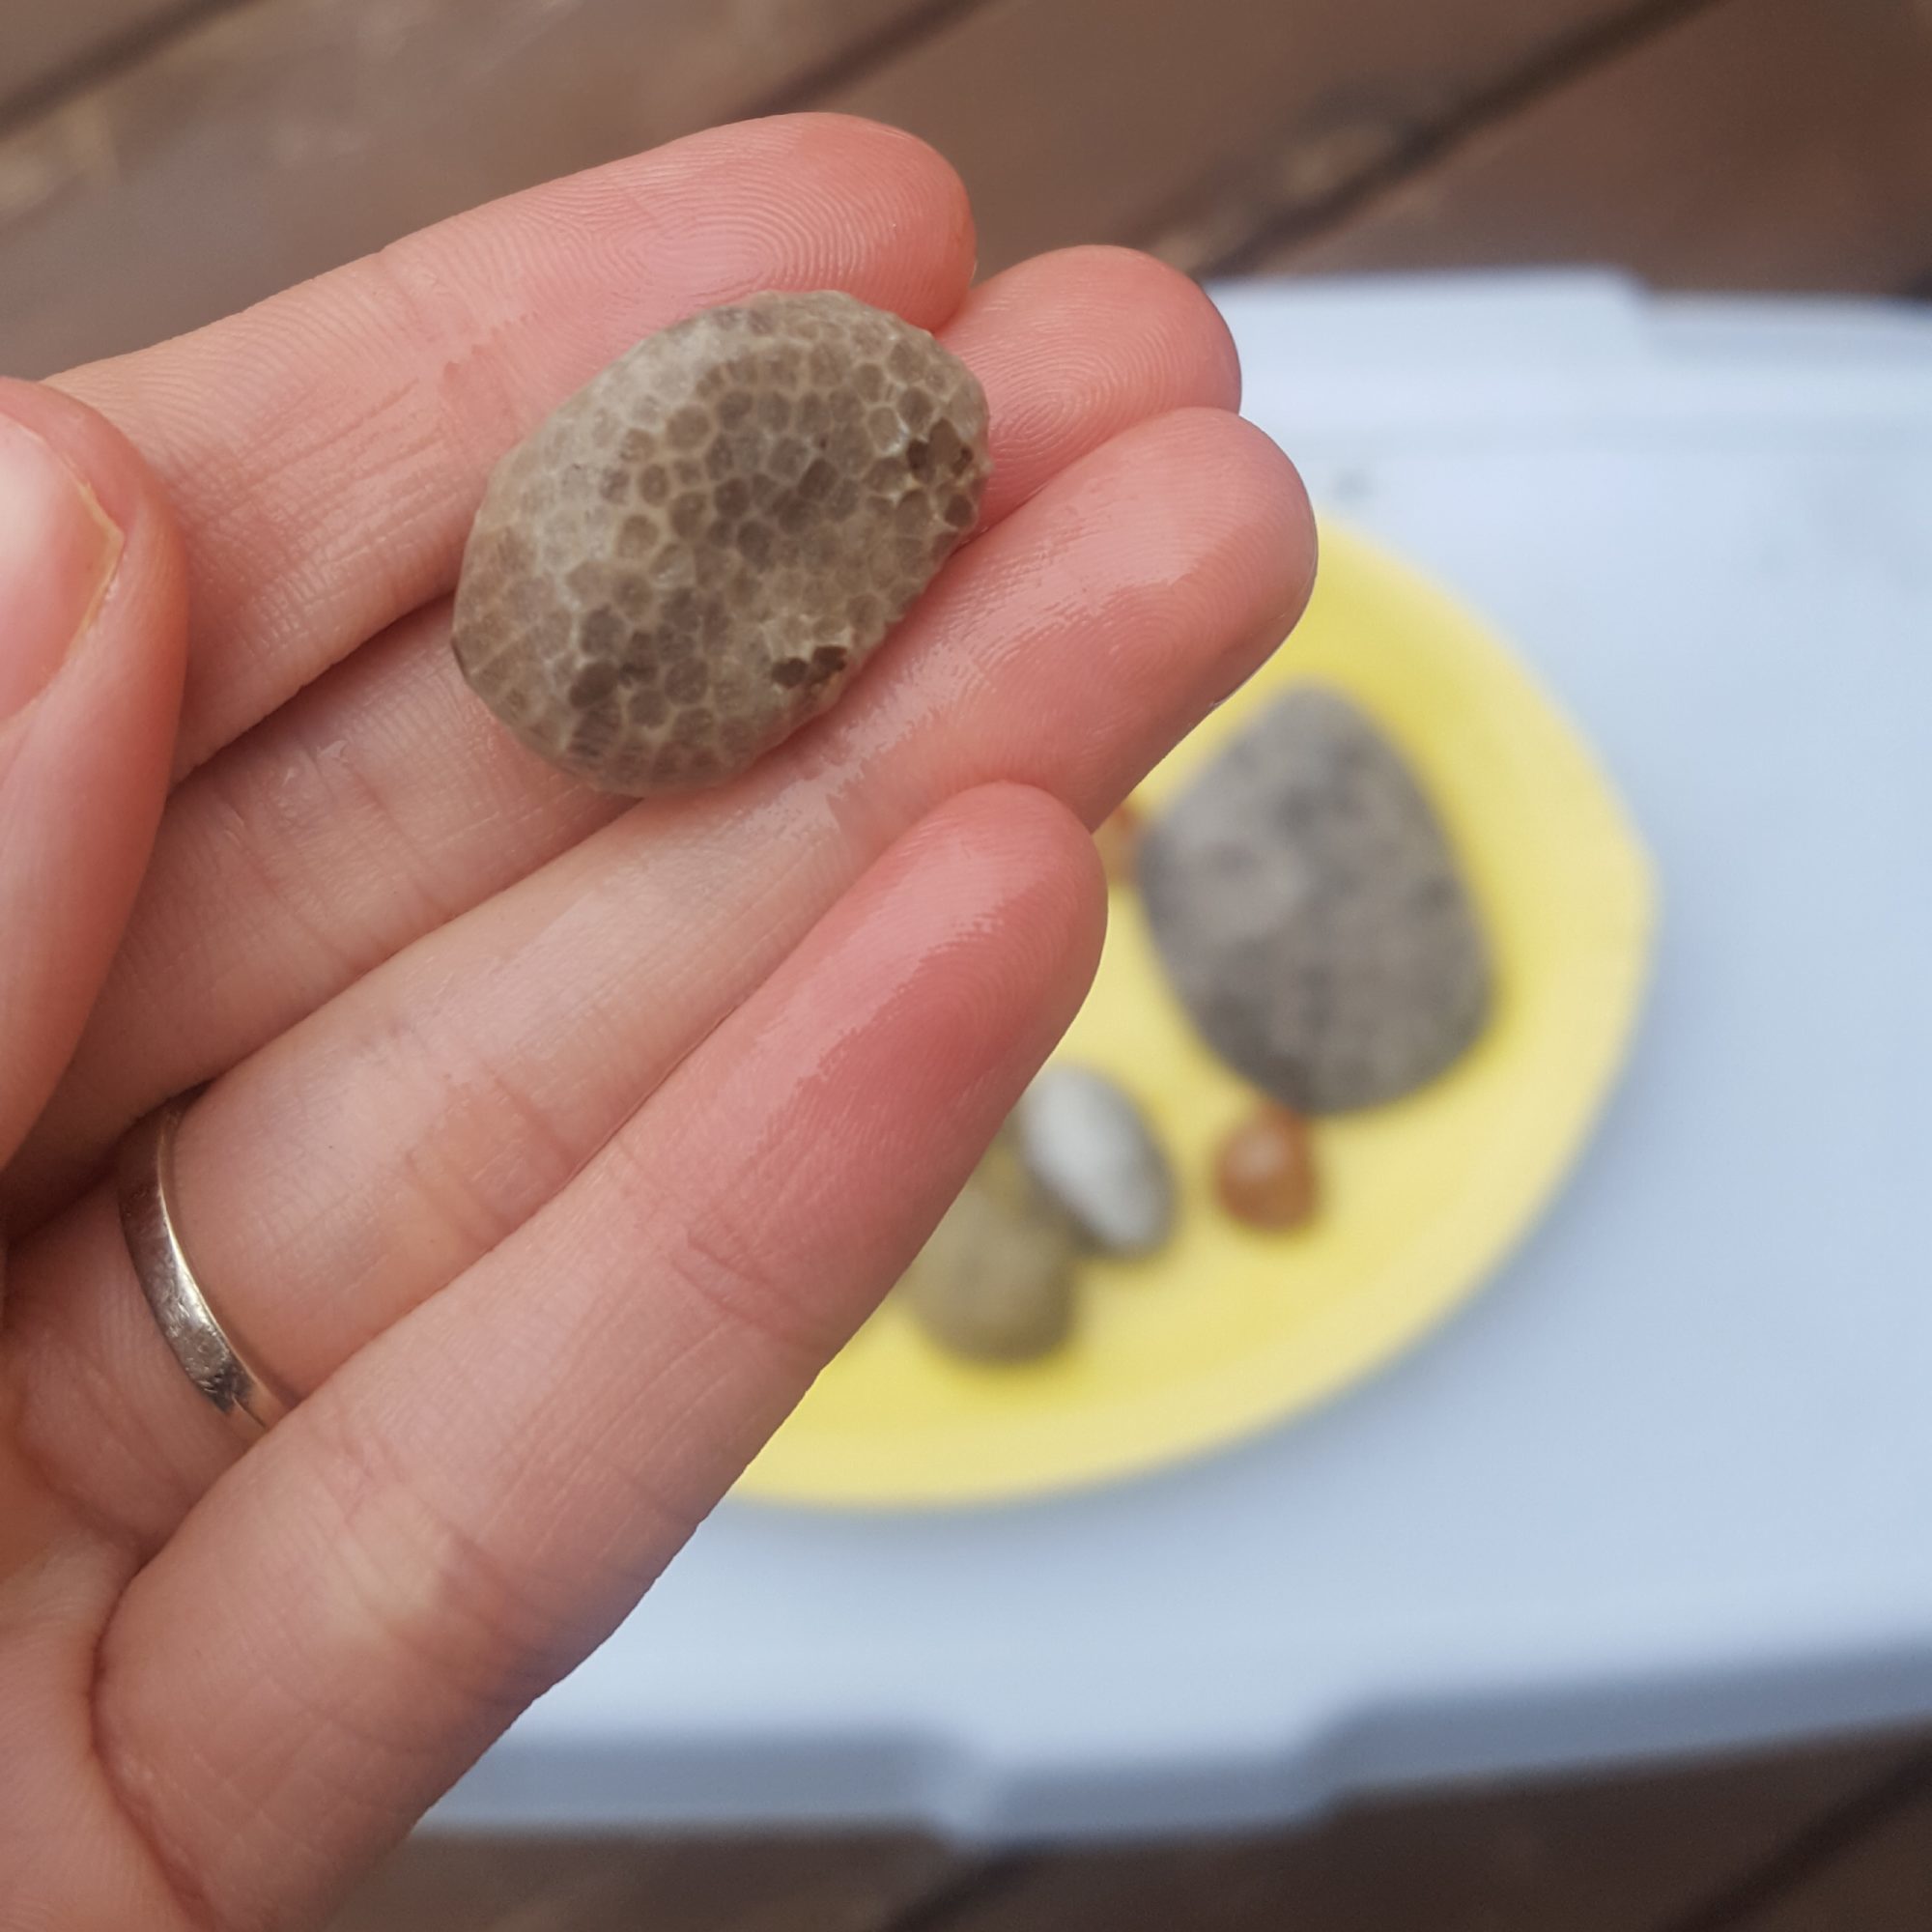 A honeycomb fossilized stone found at a lake michigan beach in leelanau county.